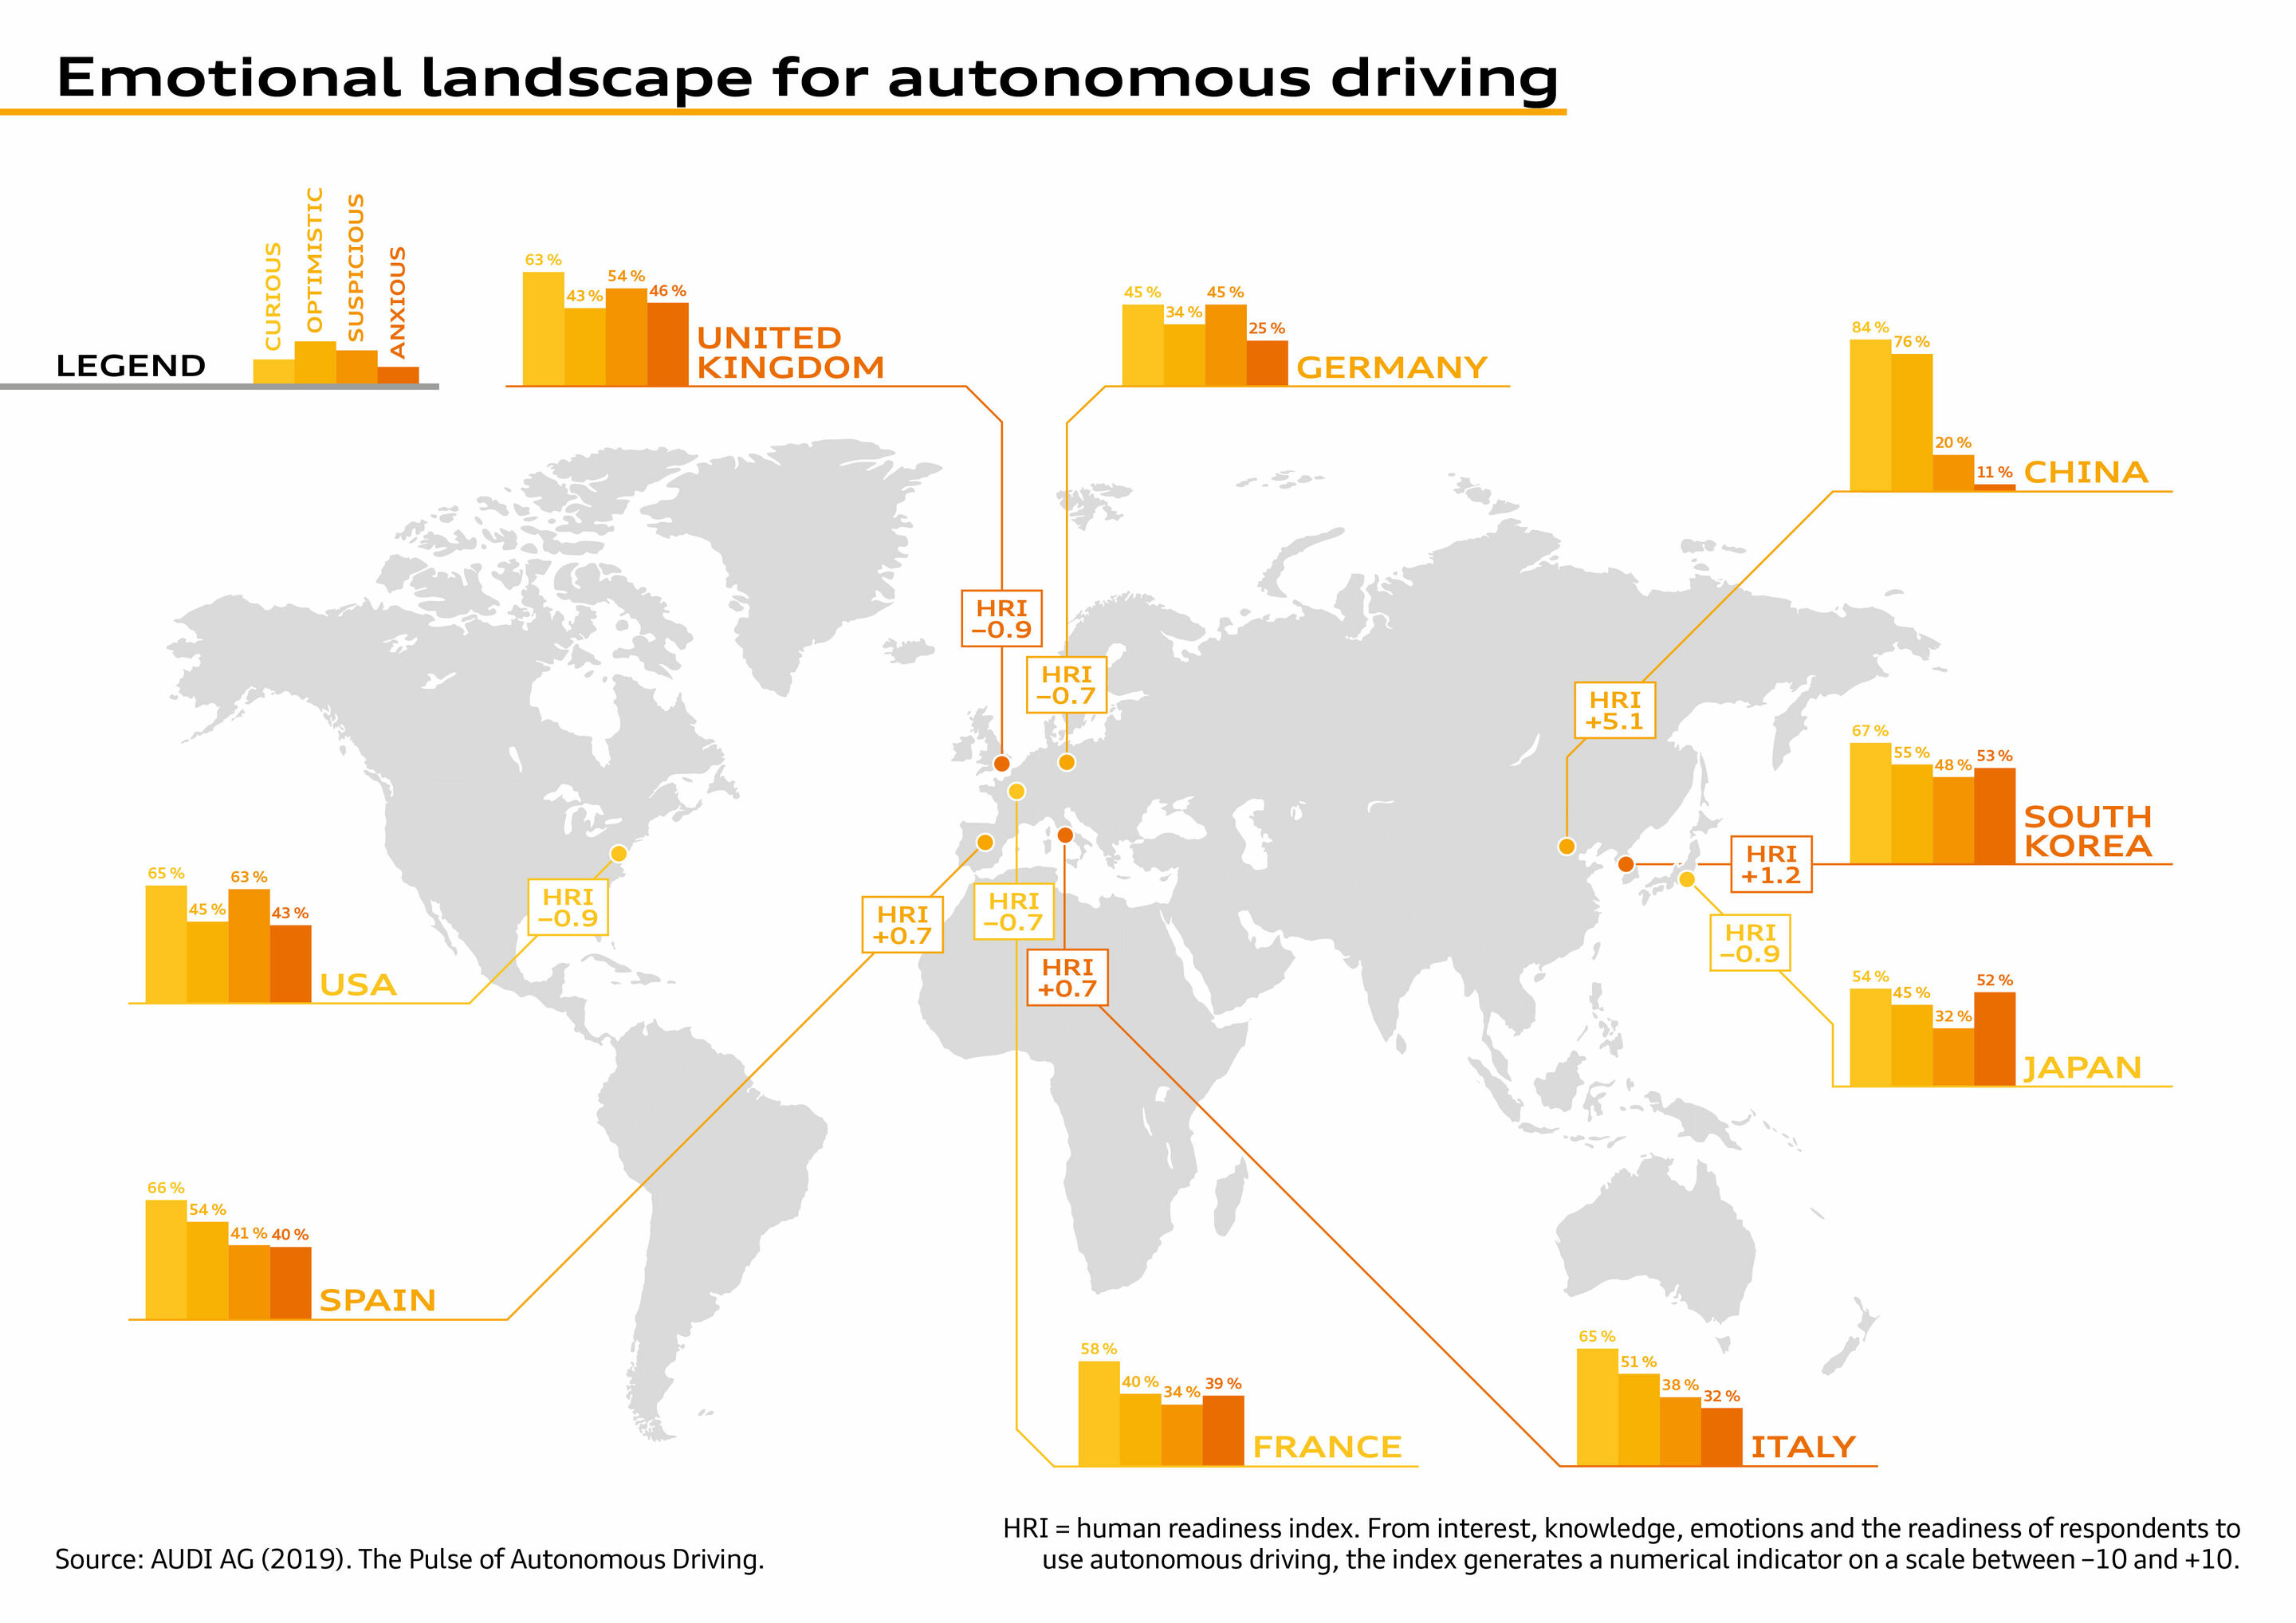 Audi publishes user typology and emotional landscape of autonomous driving